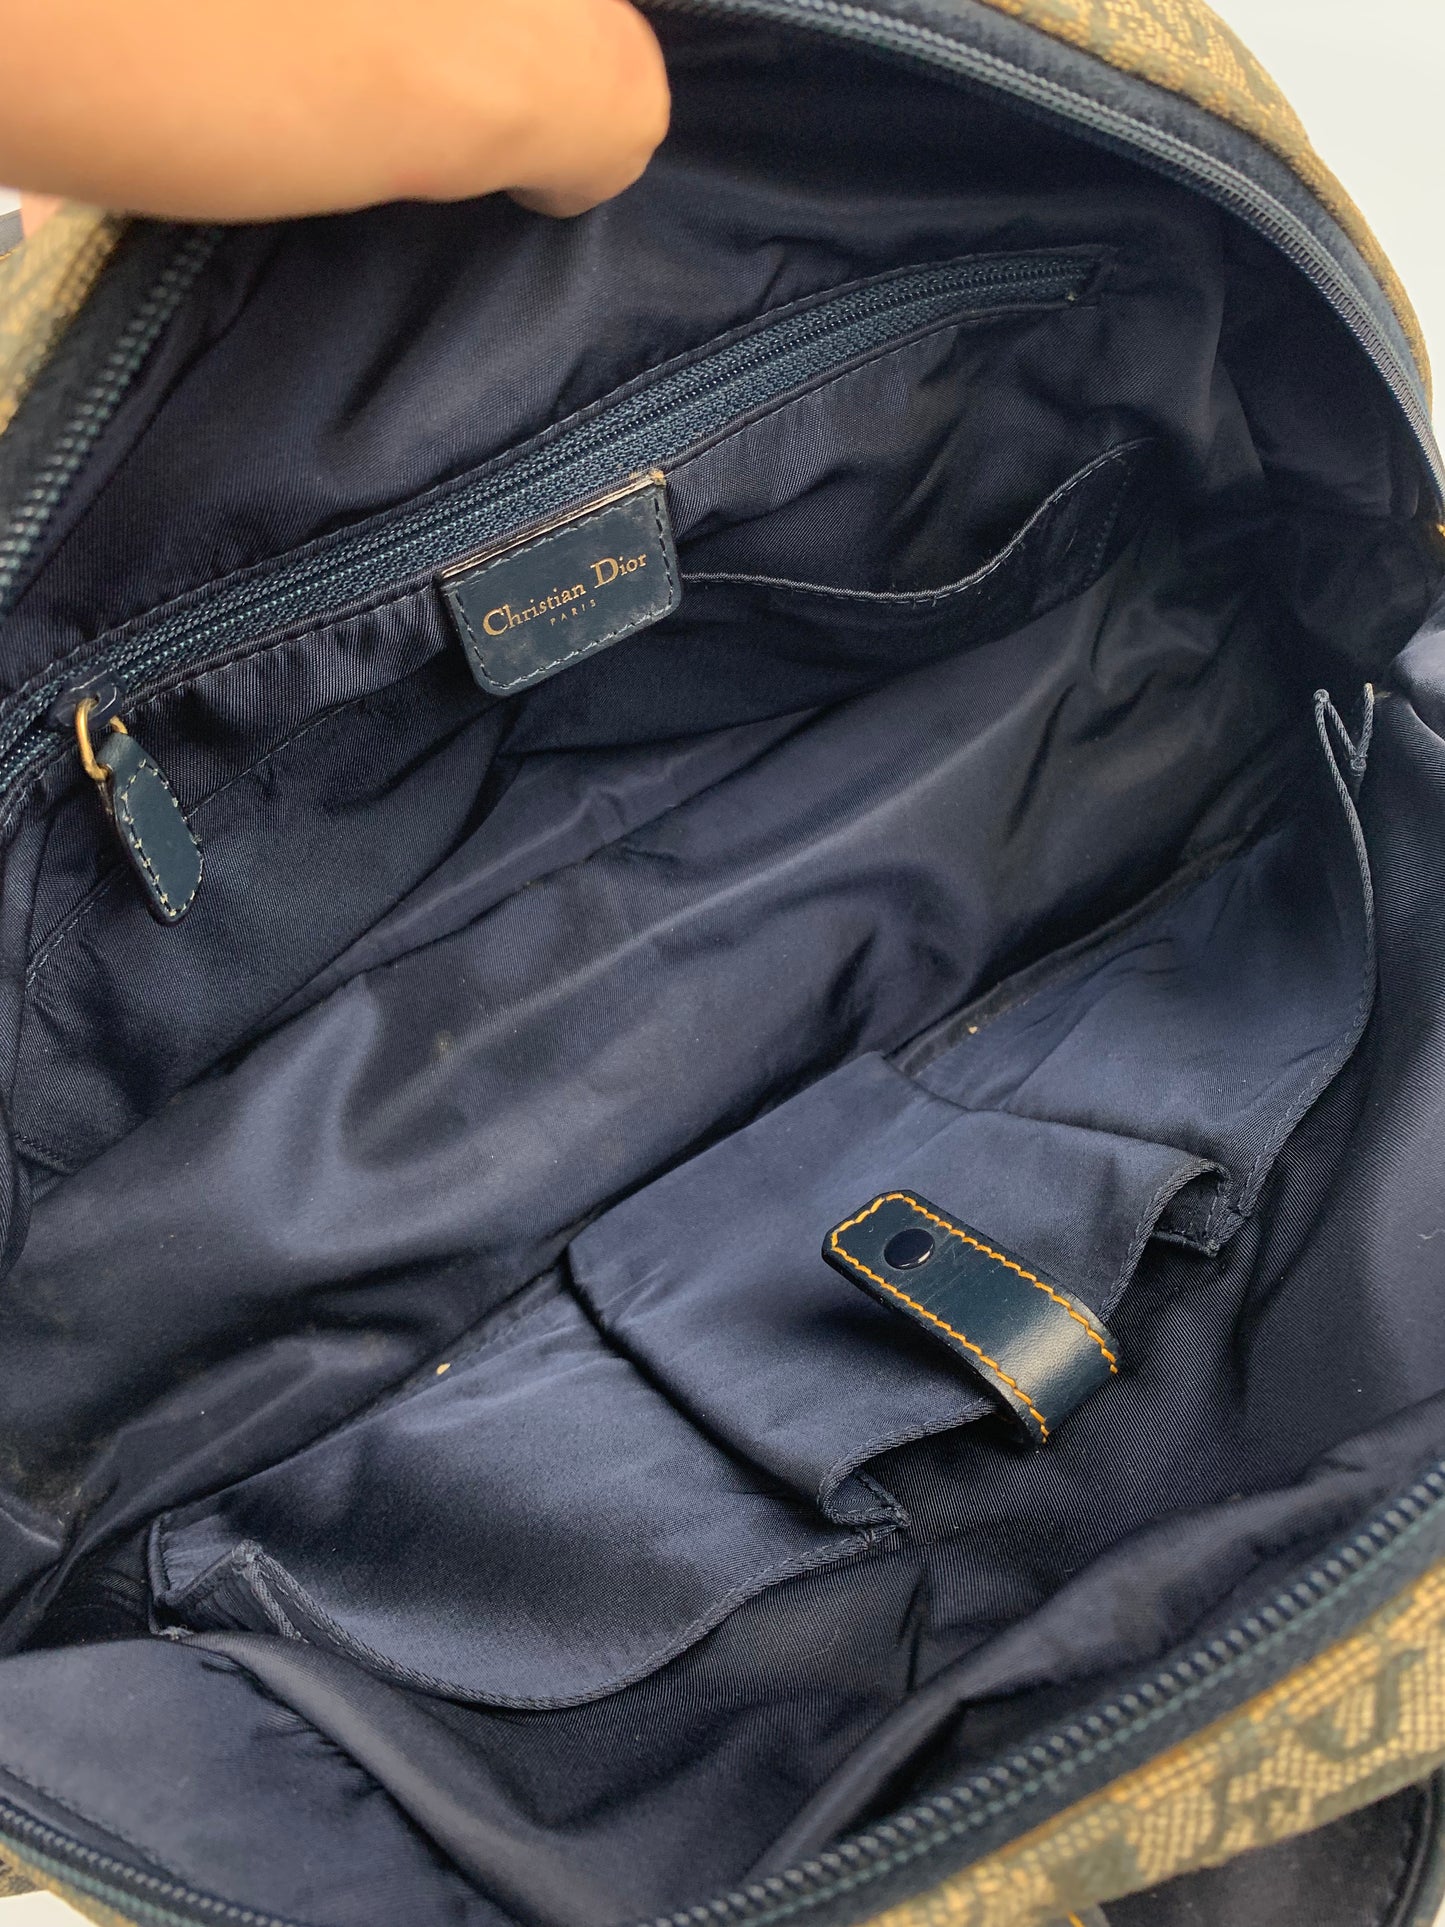 Christian Dior Navy Trotter Boston Bag